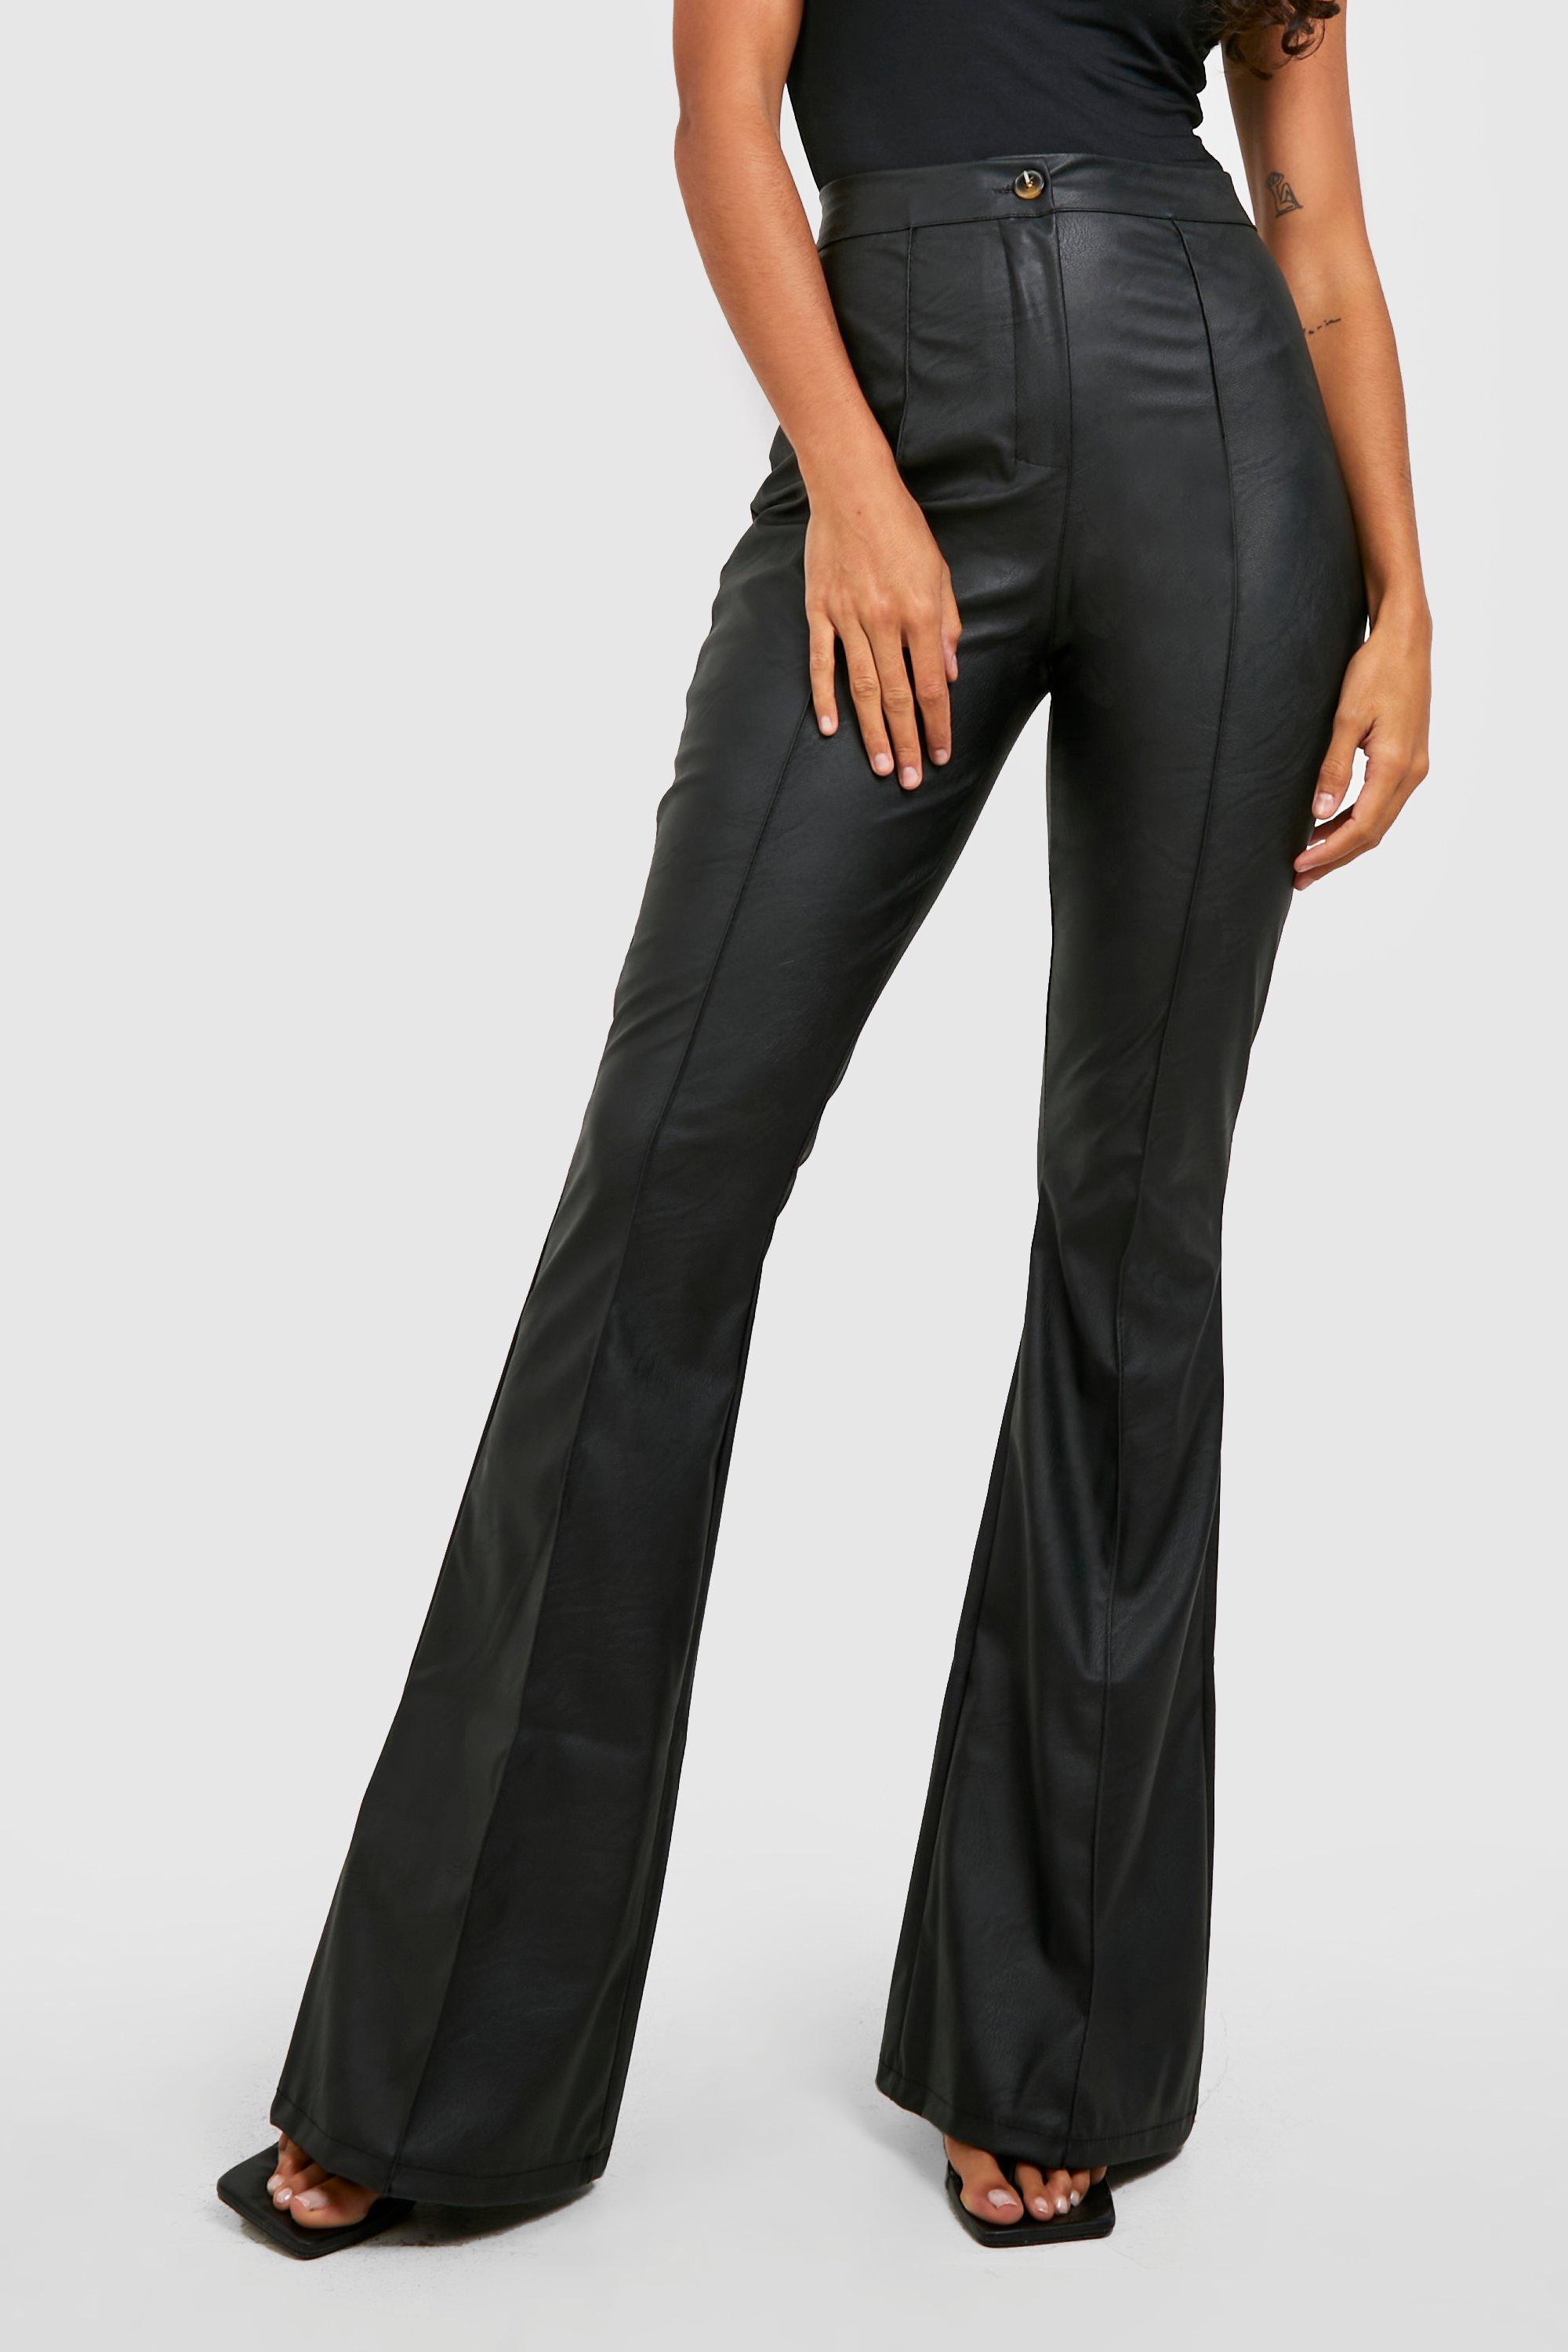 https://media.boohoo.com/i/boohoo/fzz33609_black_xl_3/female-black-high-waisted-leather-look-flared-trousers